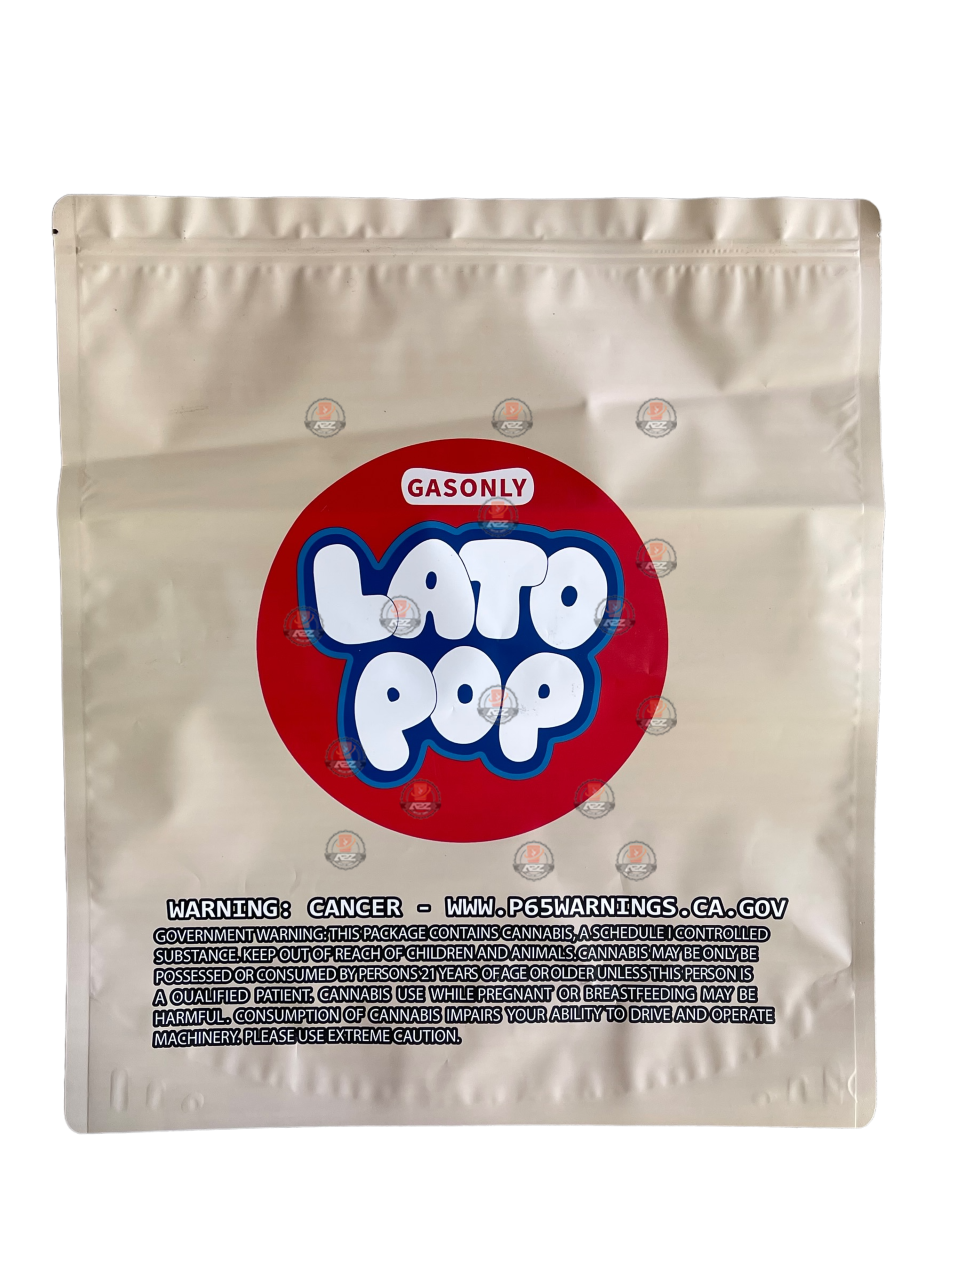 Lato Pop Top Secret Pound Bag Blue (Large) 1LBS - 16OZ (454g) Jokes Up